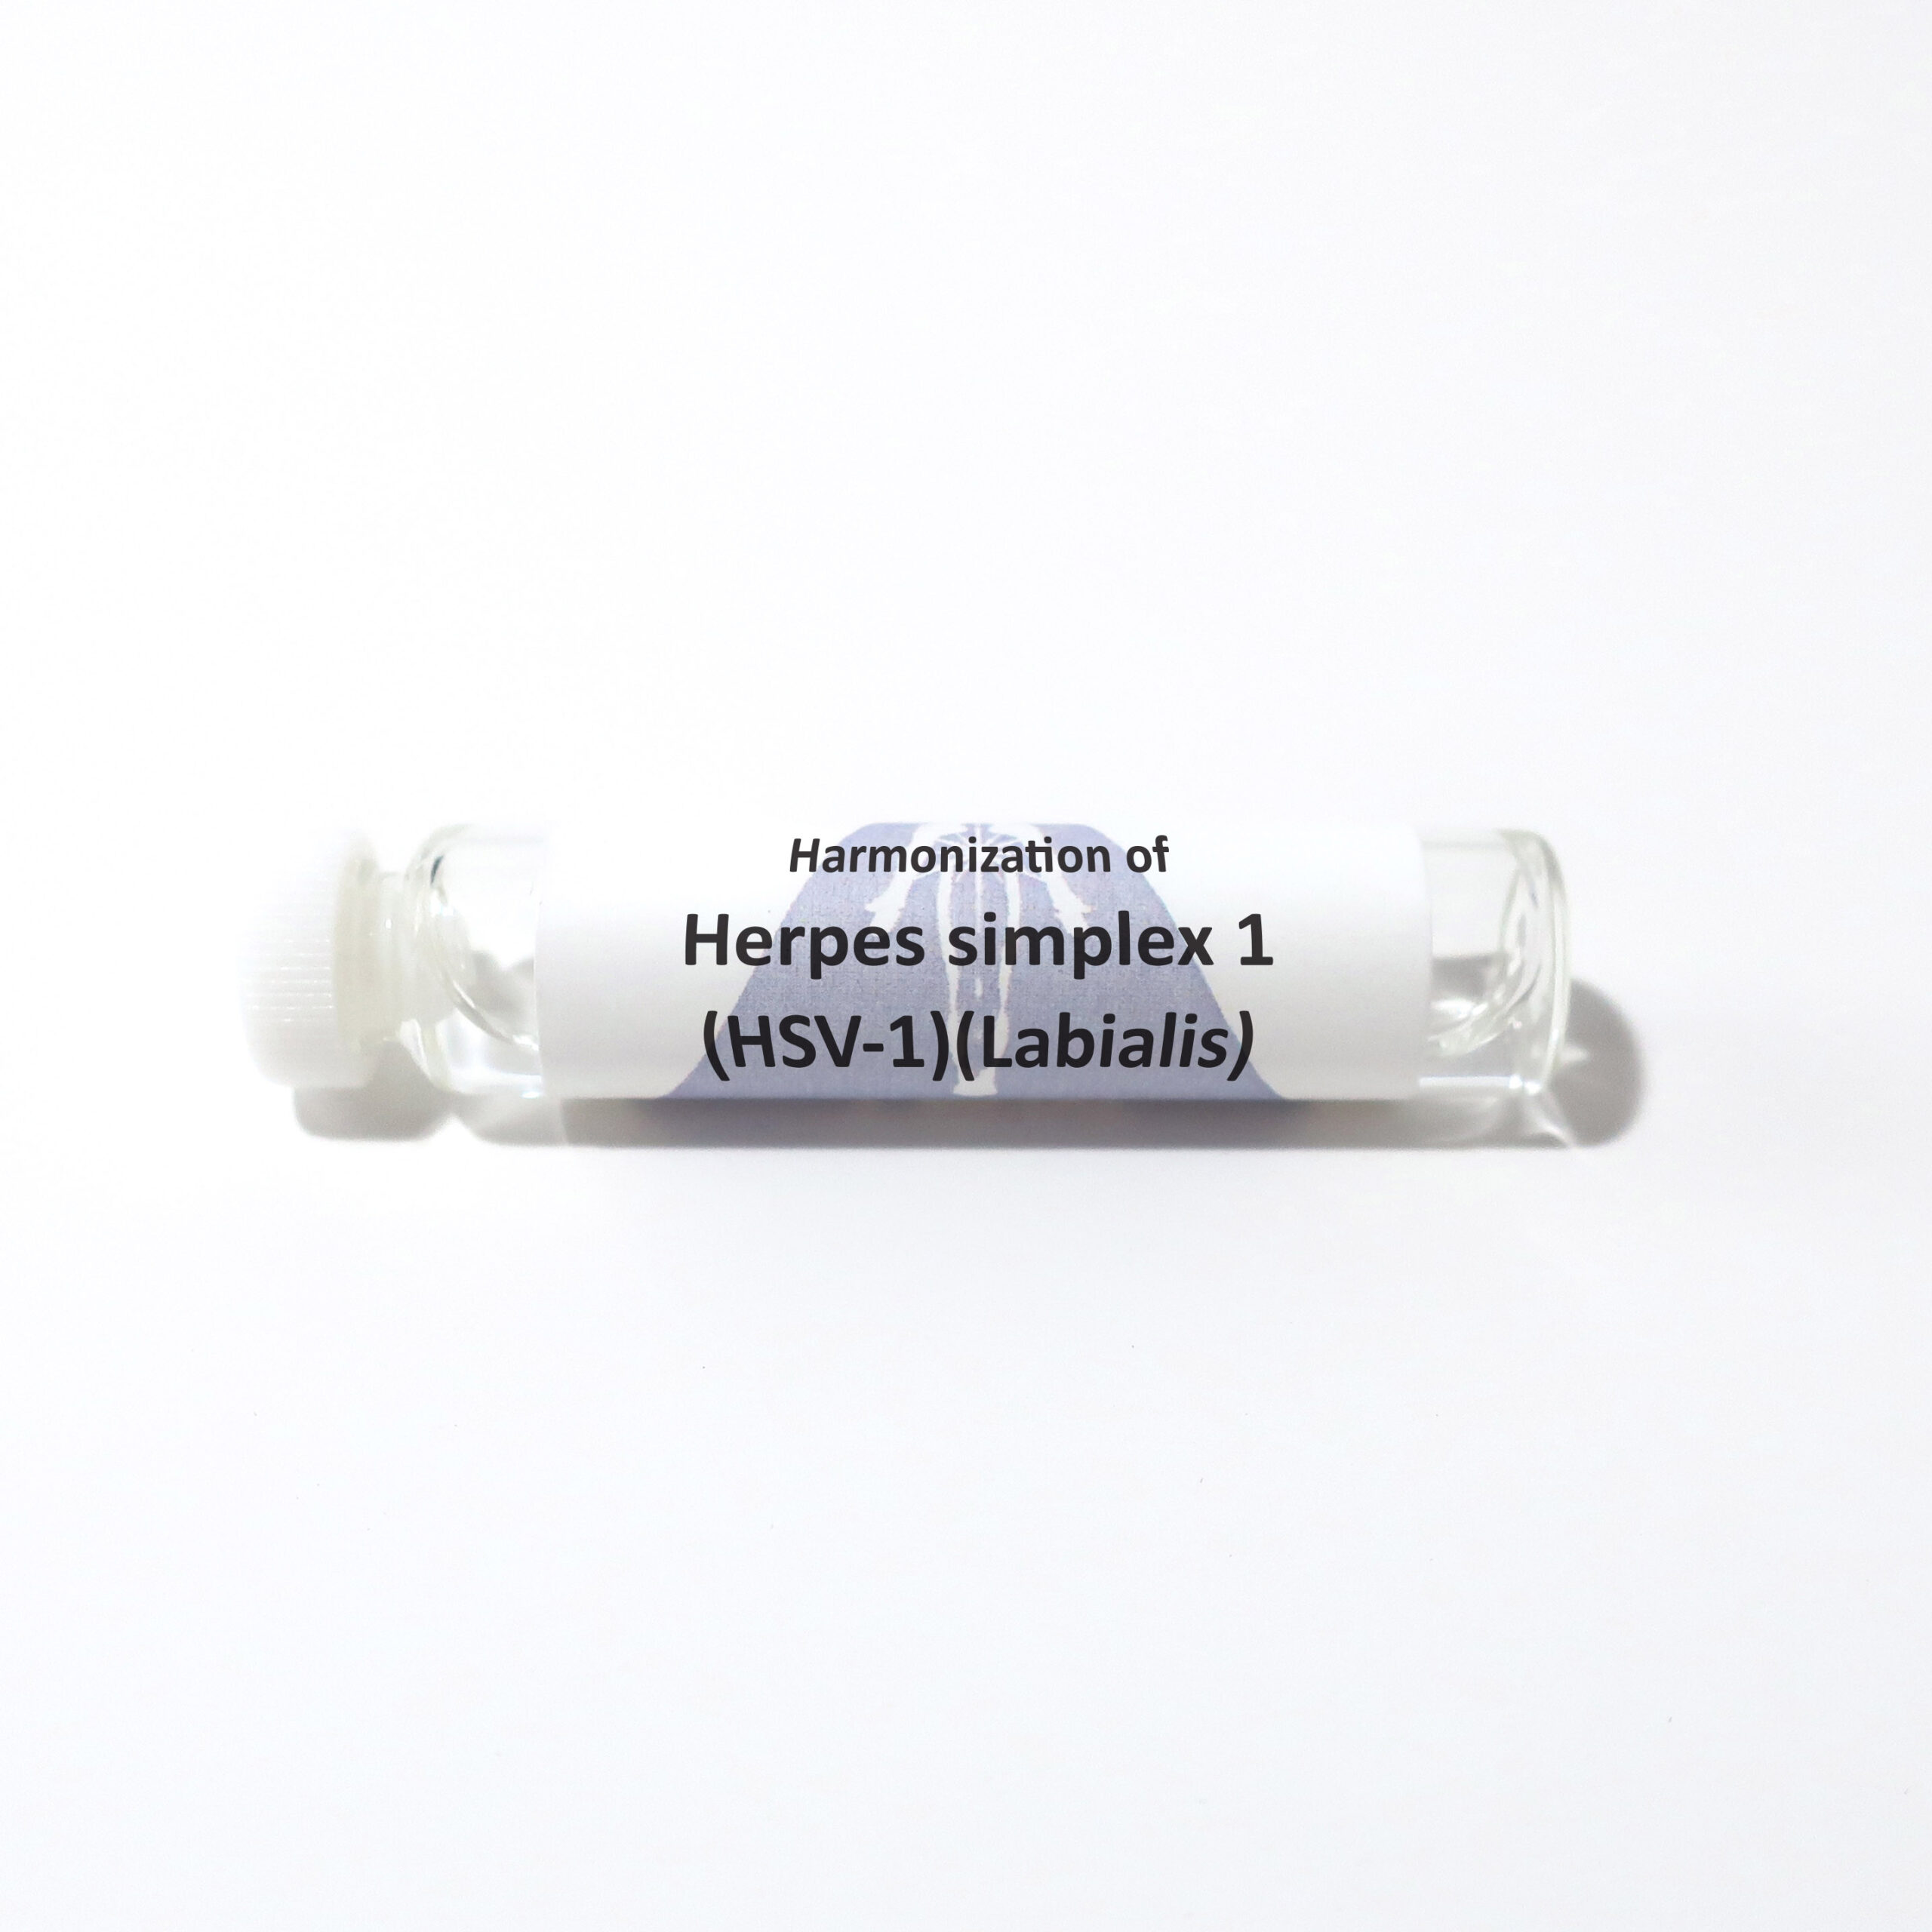 Herpes simplex 1 (HSV-1) (Labialis)